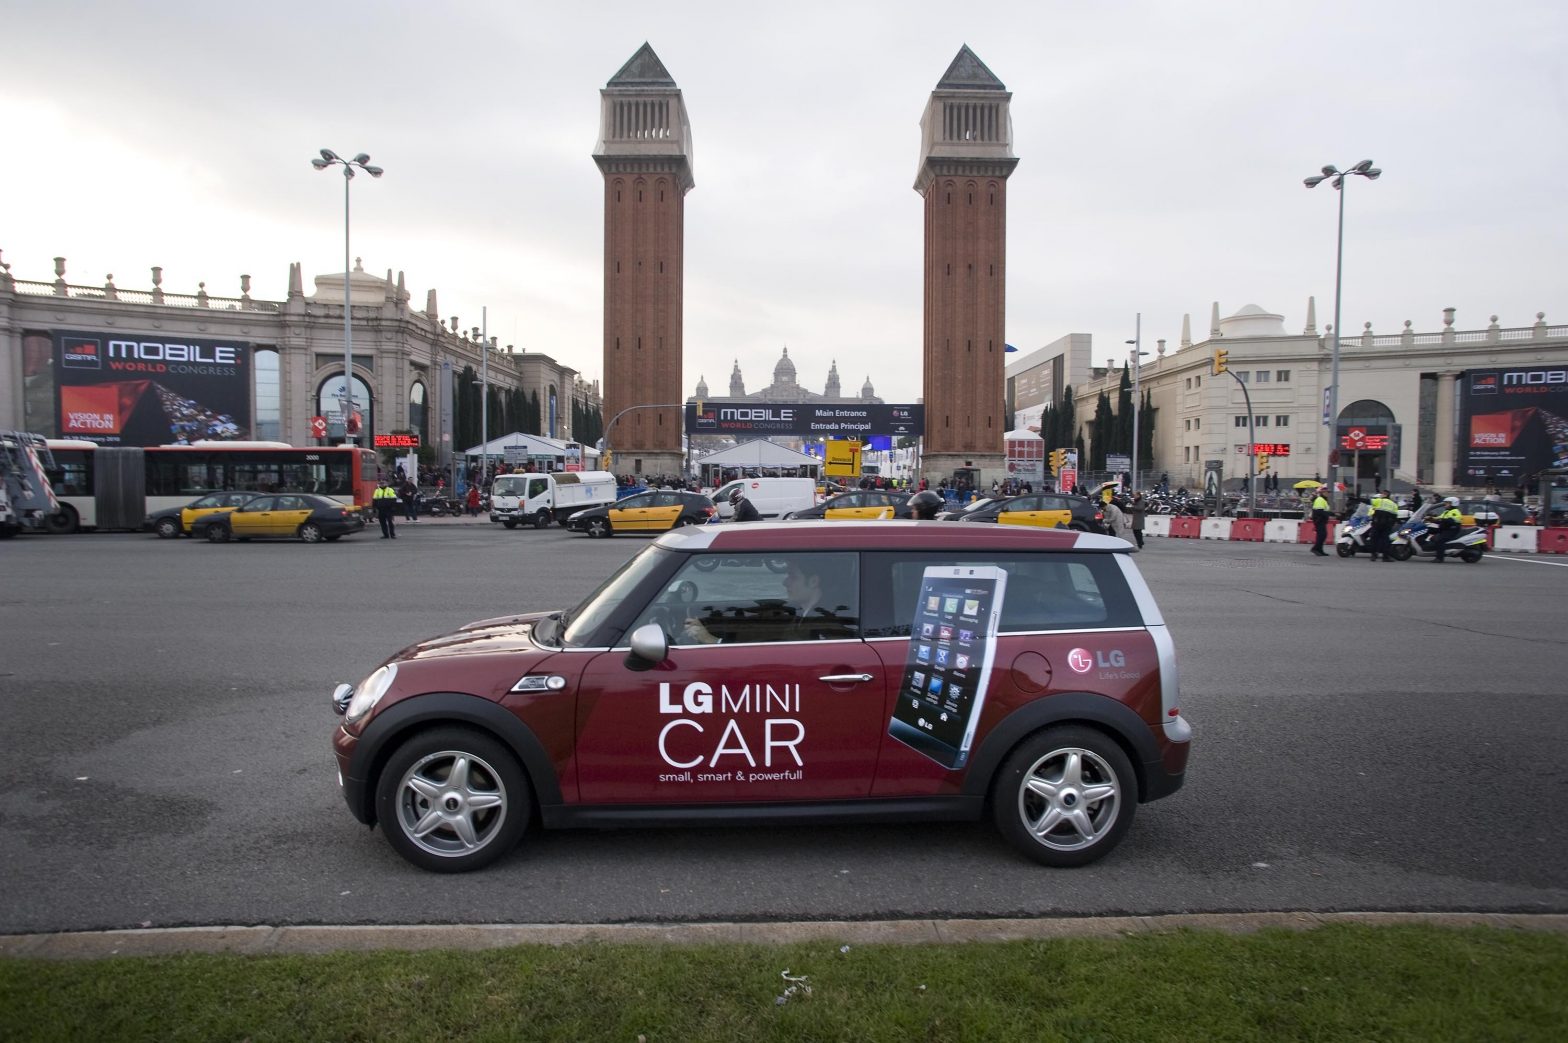 The LG Mini car drives past the Venetian Towers at Plaza España, Barcelona.